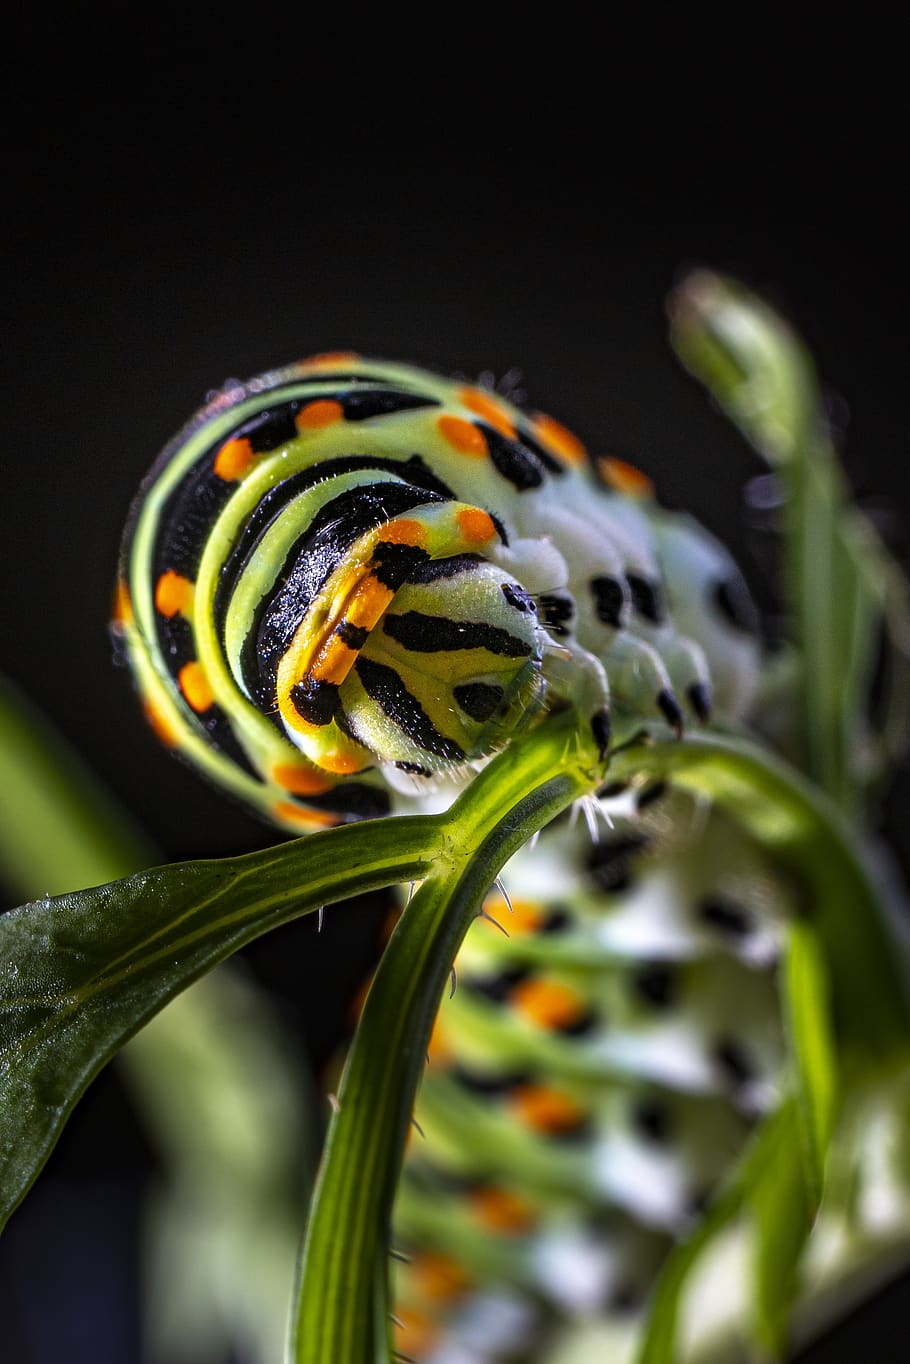 swallowtail caterpillar, caterpillar, butterfly, garden, close-up, beauty in nature, plant, flower, nature, flowering plant